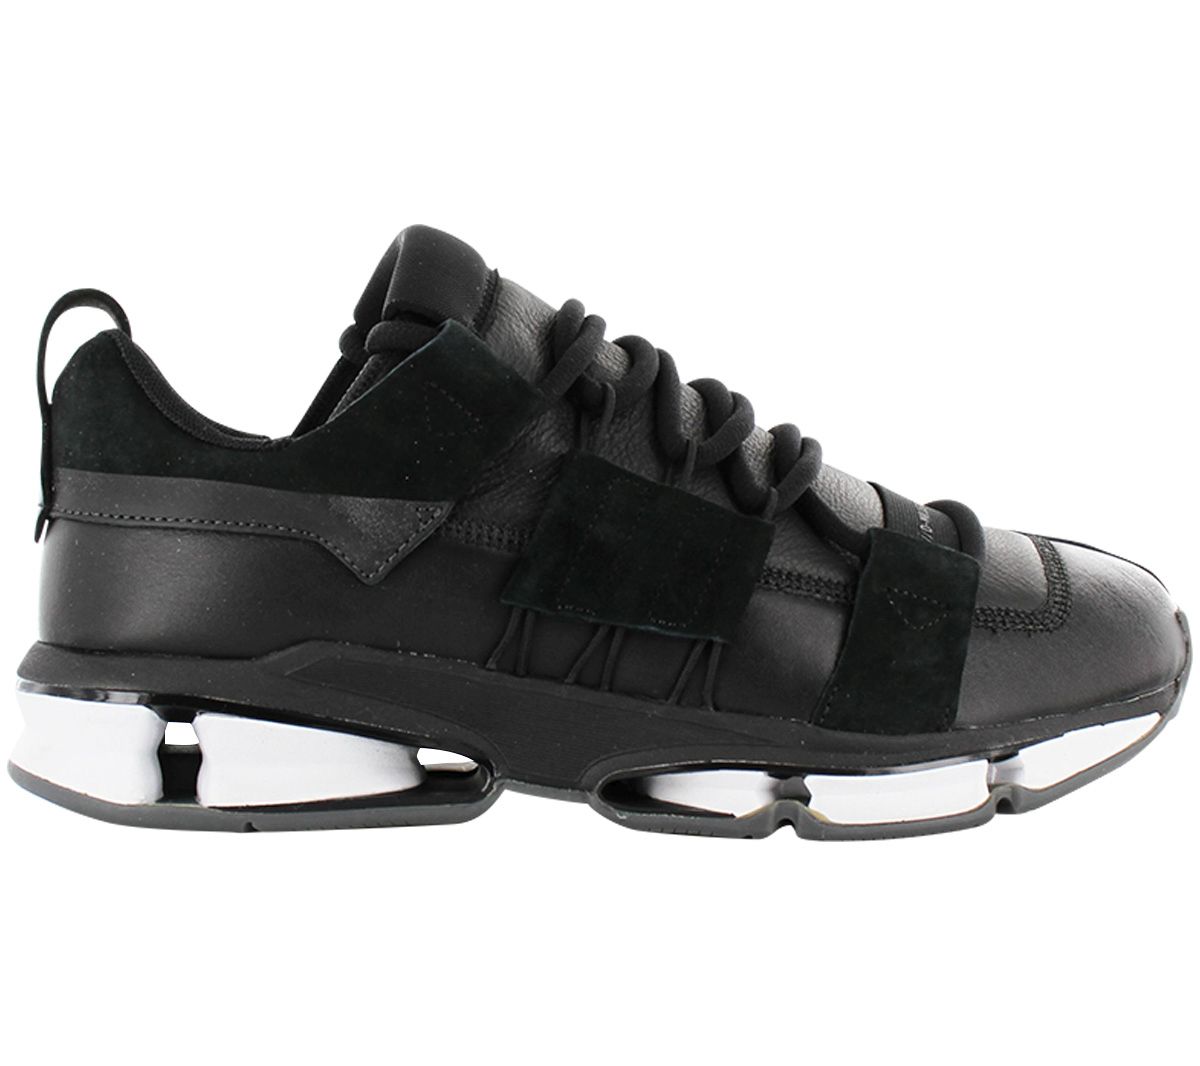 Adidas originals Twinstrike Adv Stretch Leather B28015 Men's Sneaker Shoes  New | eBay